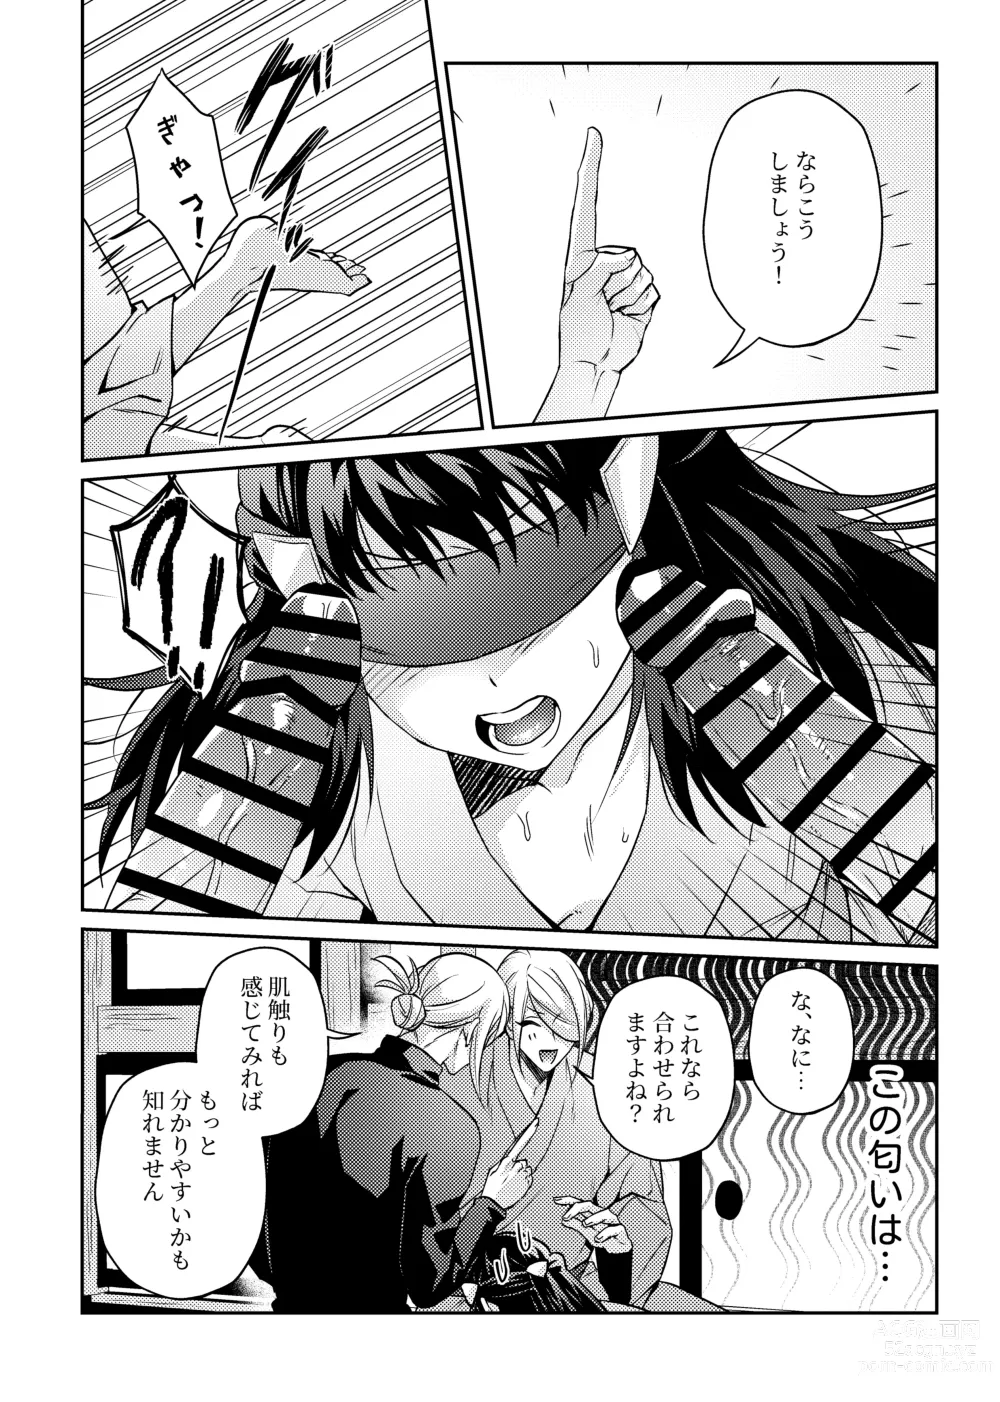 Page 6 of doujinshi Mekakushi VoShou